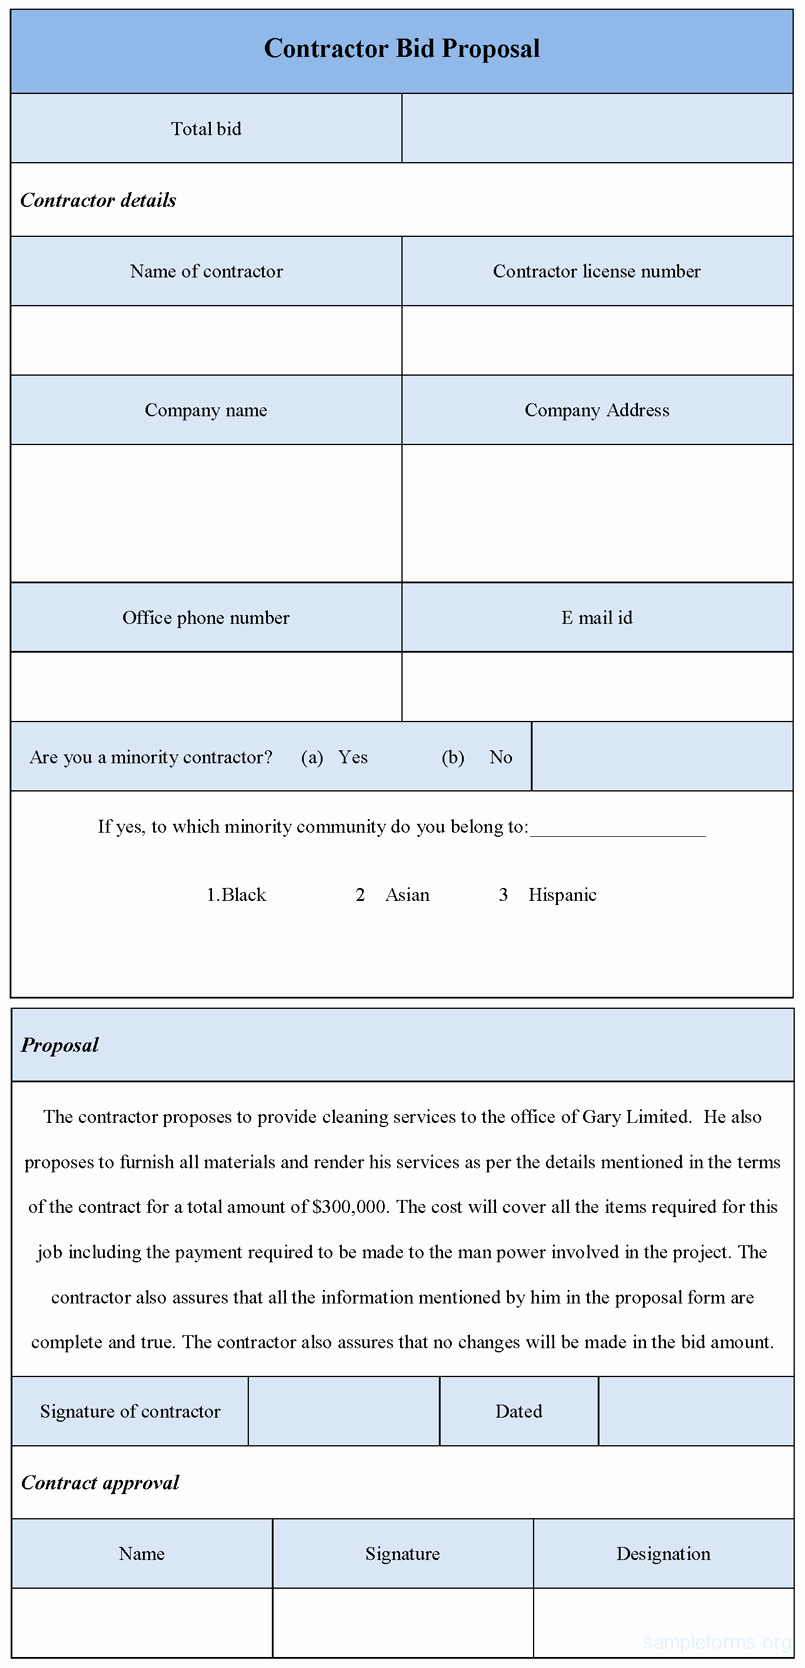 Free Bid Proposal Template Beautiful Contractor Bid Proposal form Sample forms